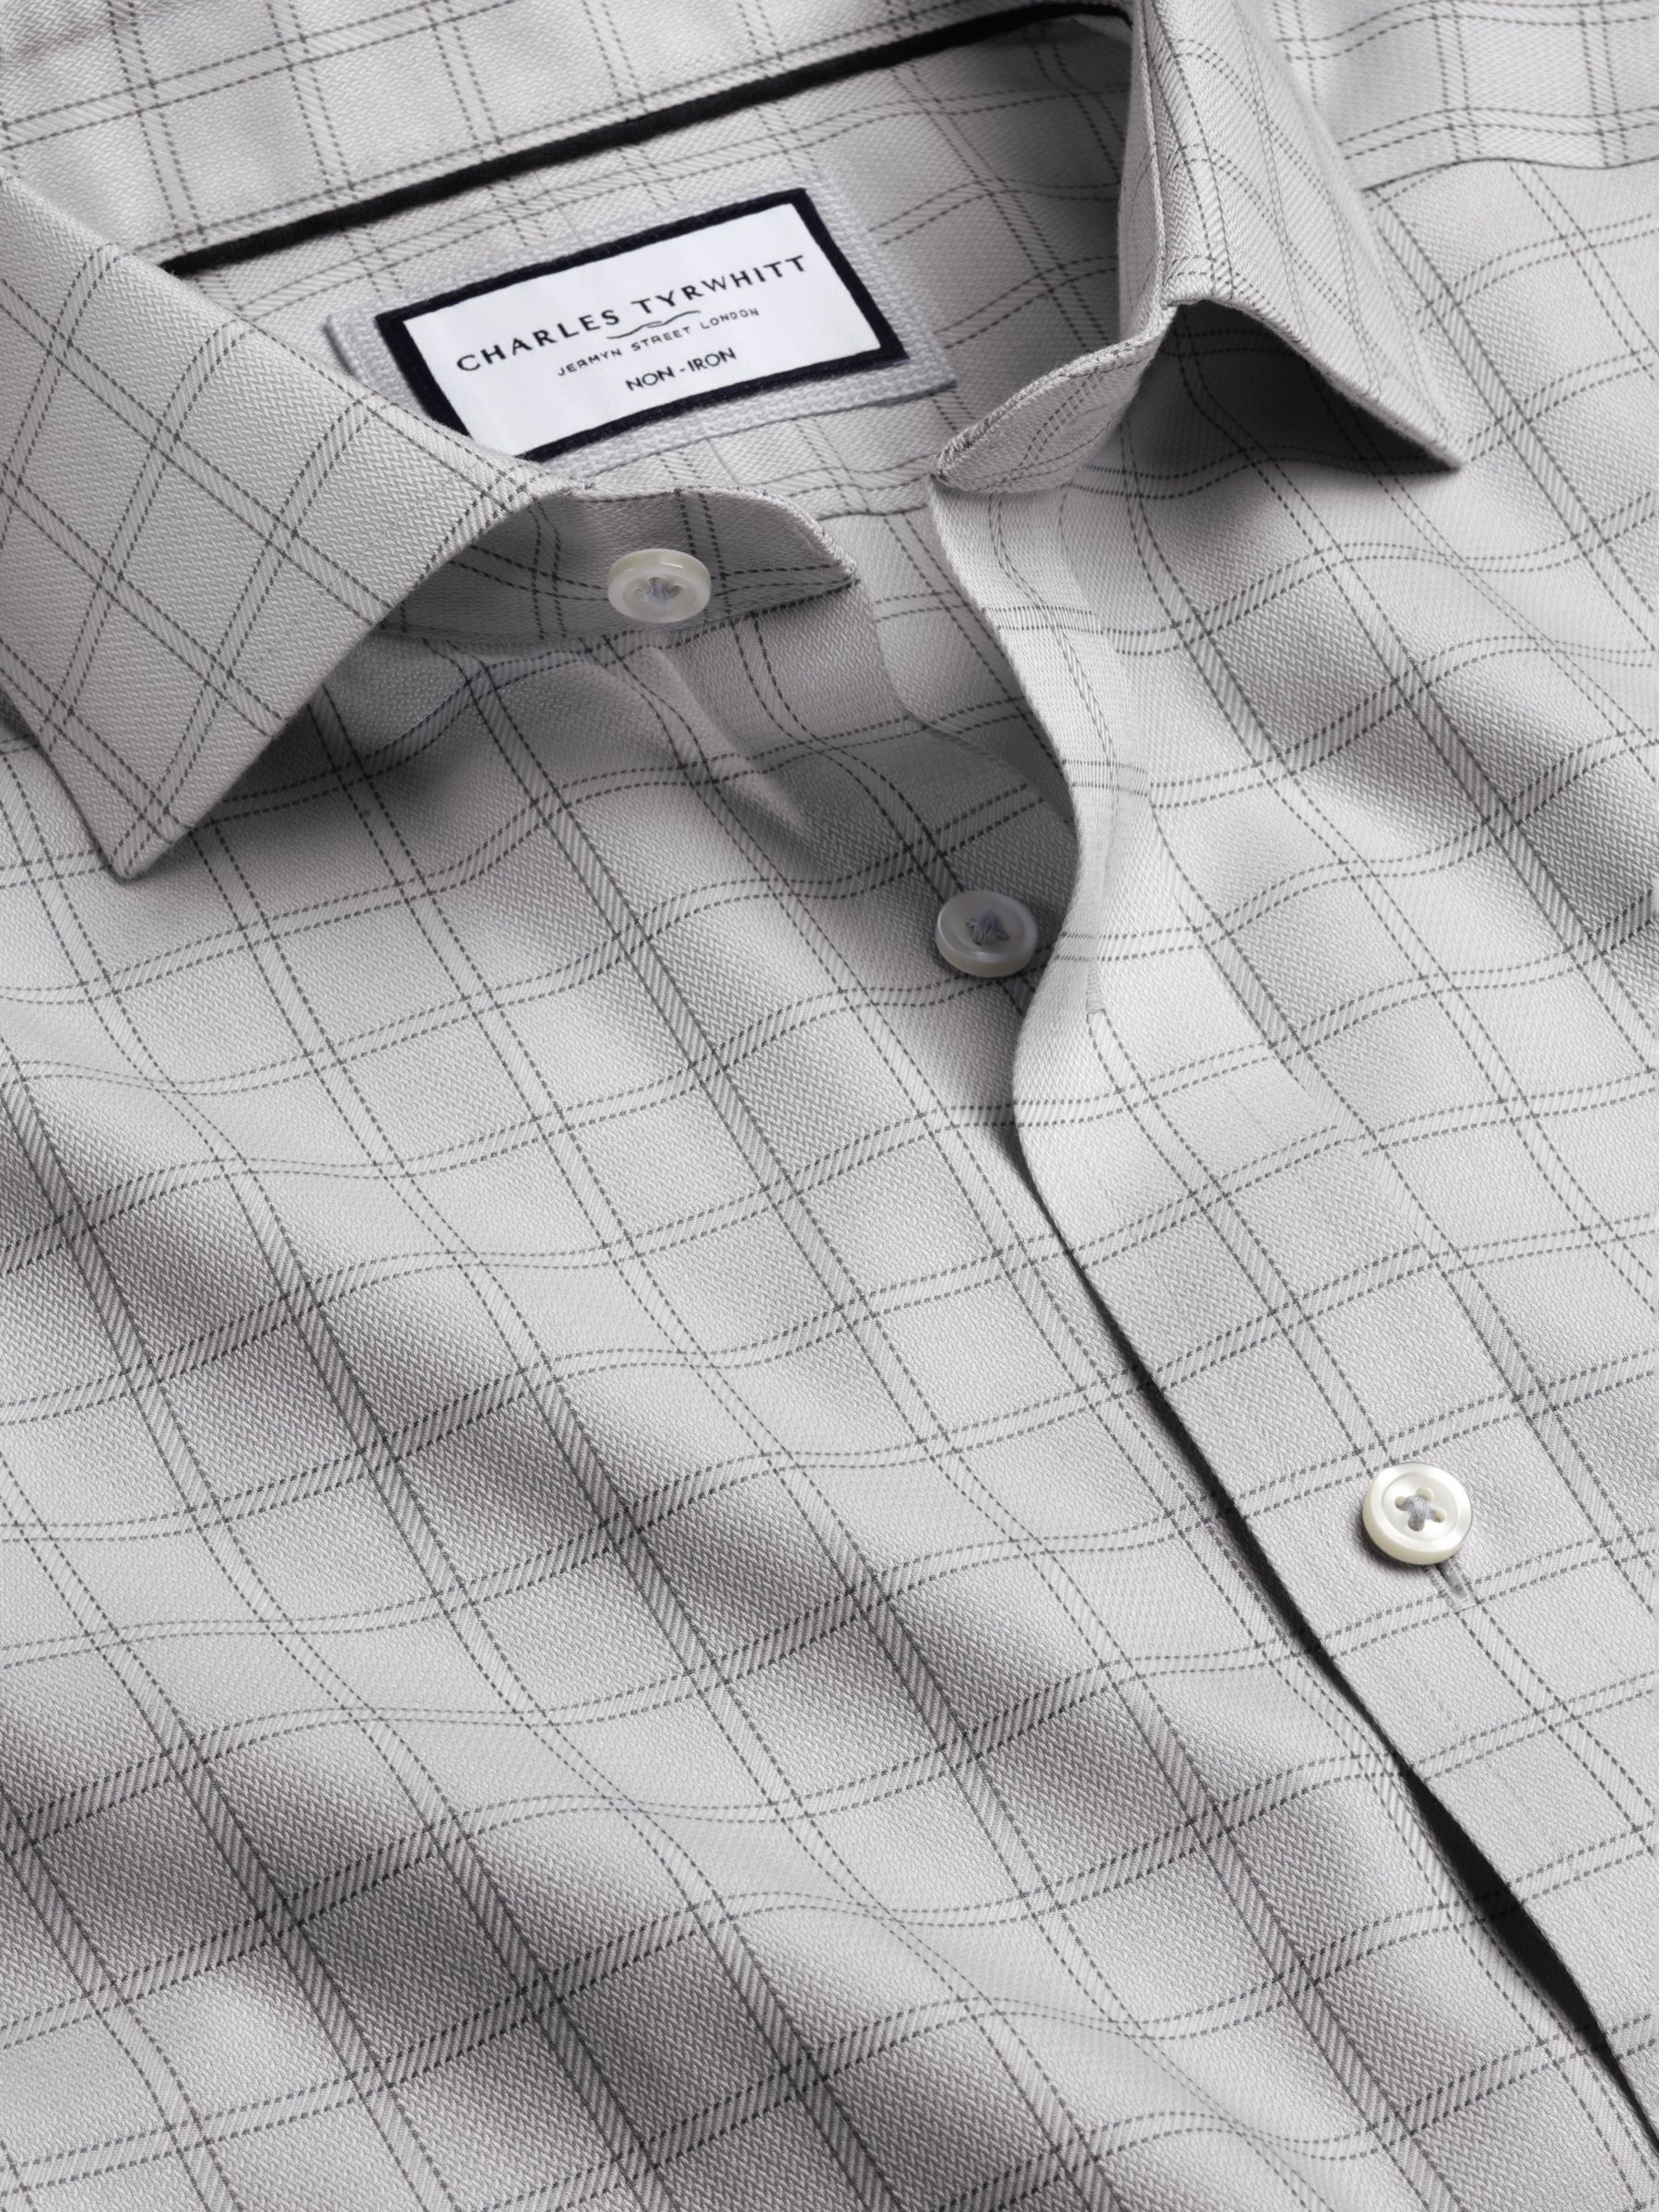 Buy Charles Tyrwhitt Non-Iron Mayfair Weave Checked Shirt Online at johnlewis.com